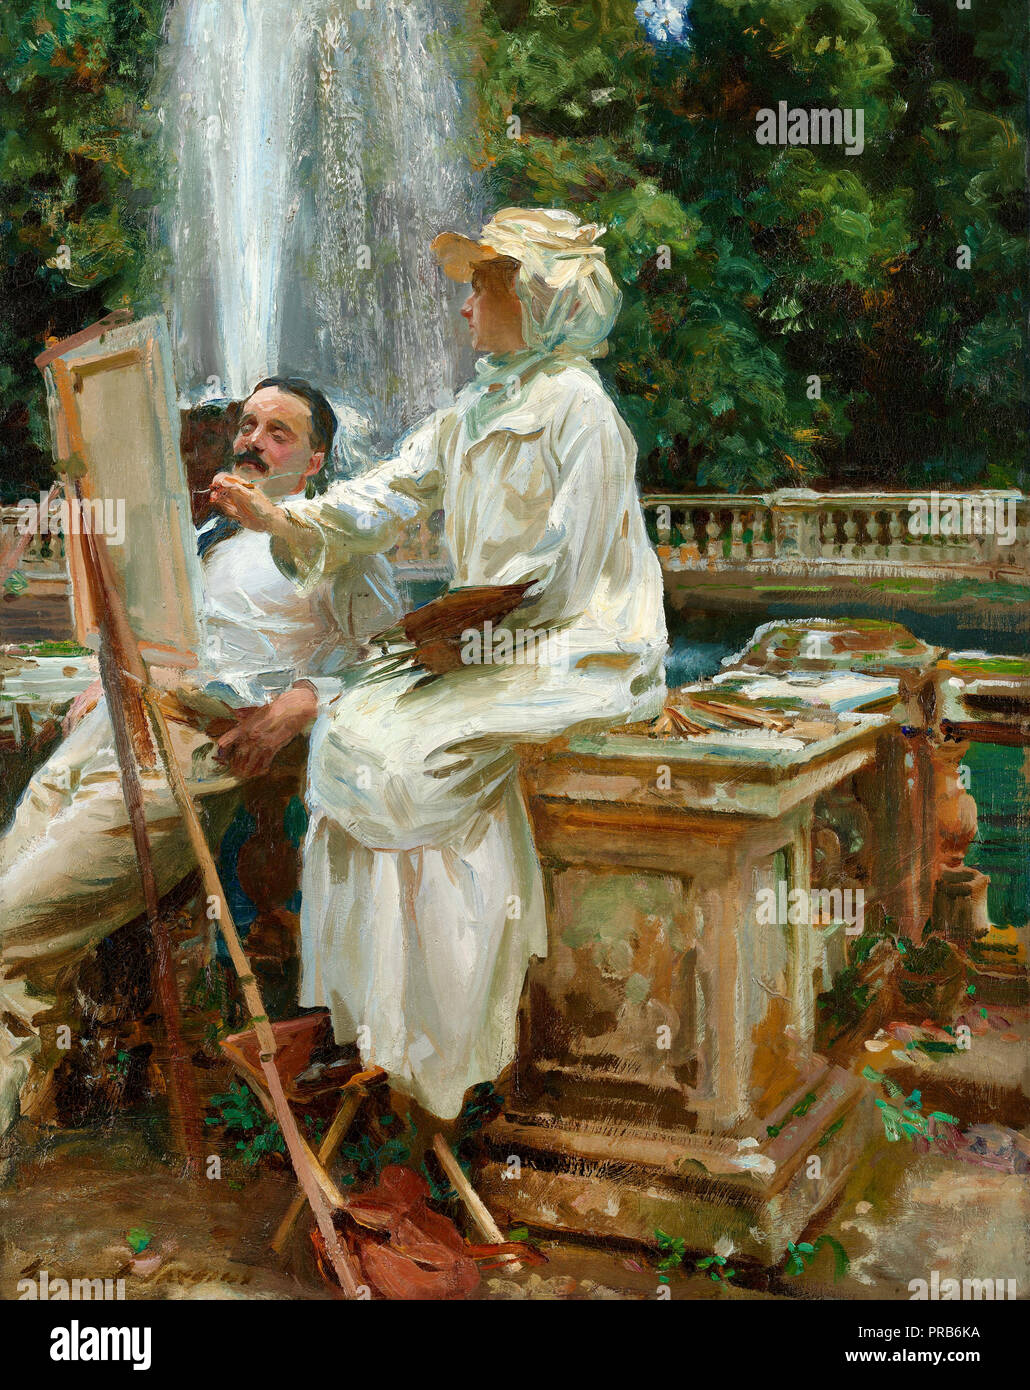 John Singer Sargent, The Fountain, Villa Torlonia, Frascati, Italy 1907 Oil on canvas, Art Institute of Chicago, Chicago, USA. Stock Photo